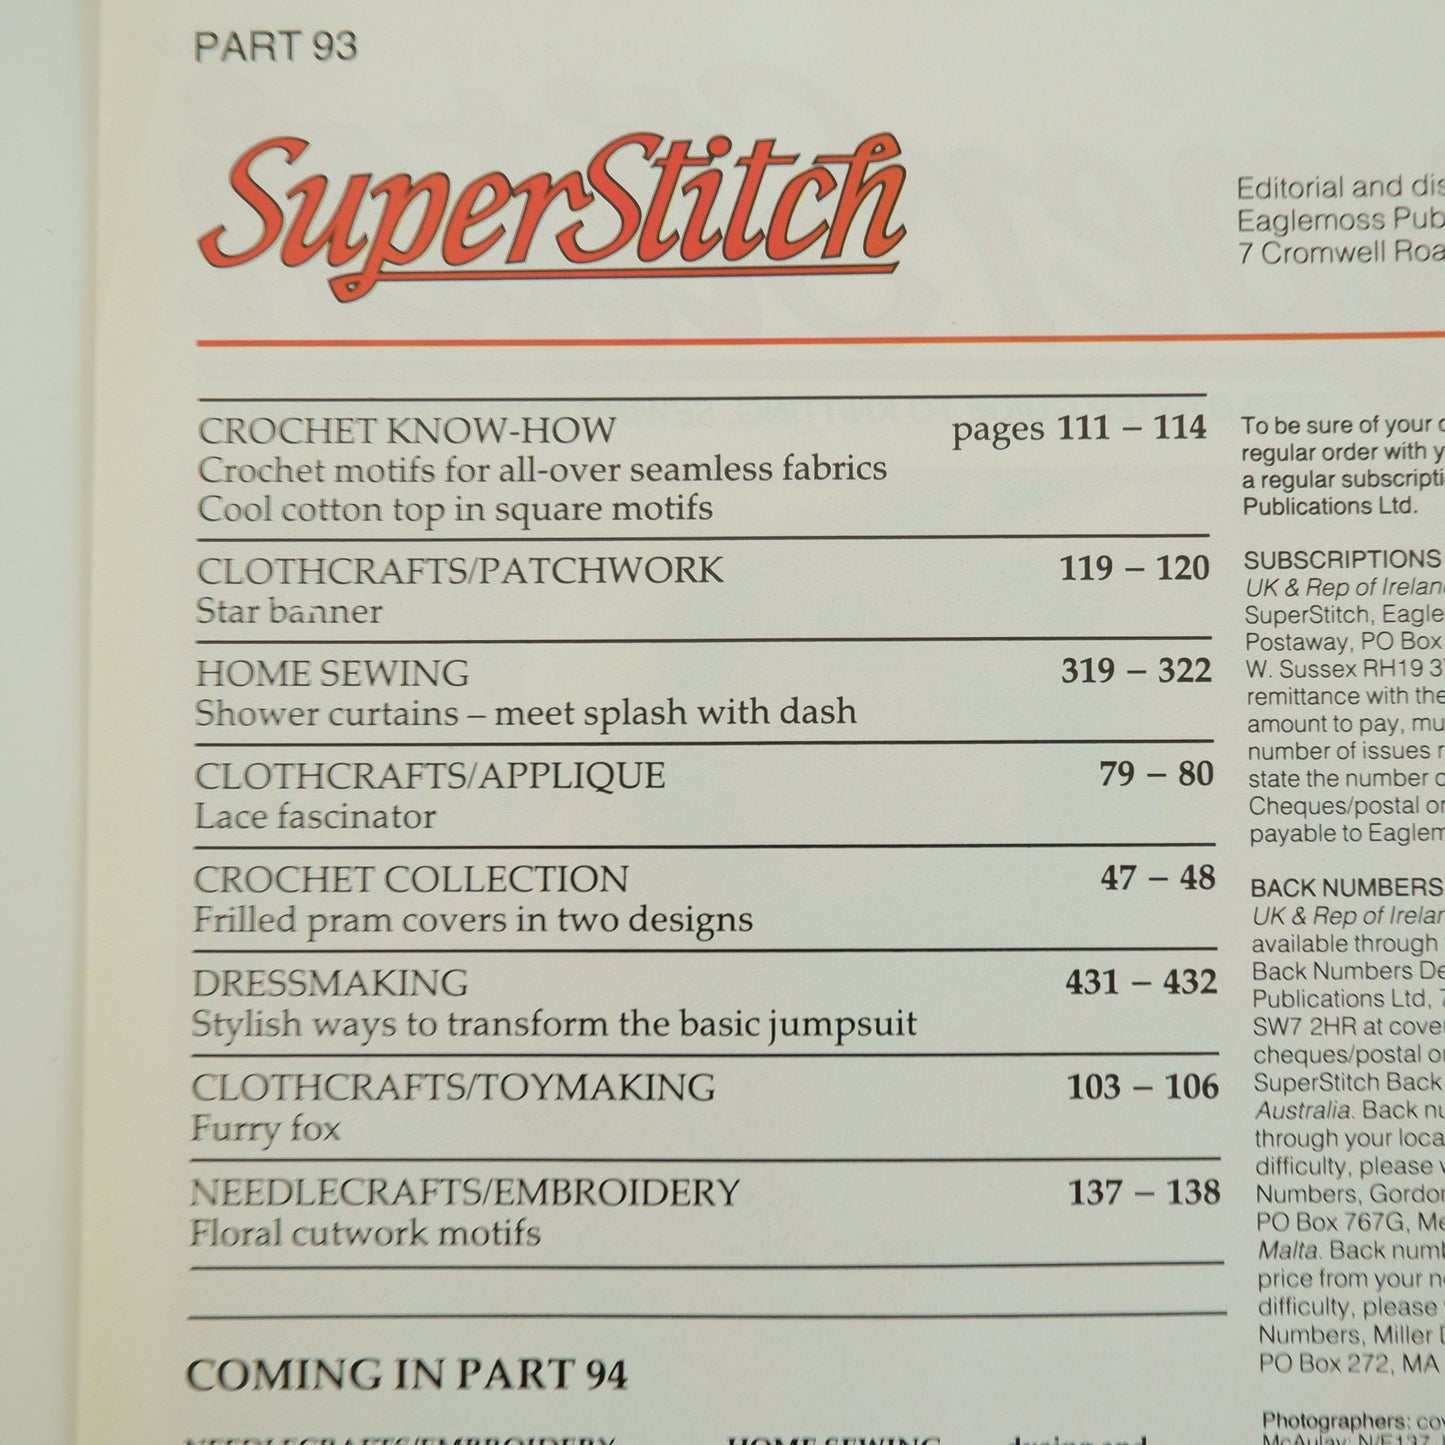 SuperStitch Magazine number 93 Sewing Crochet Patchwork and Needlecrafts